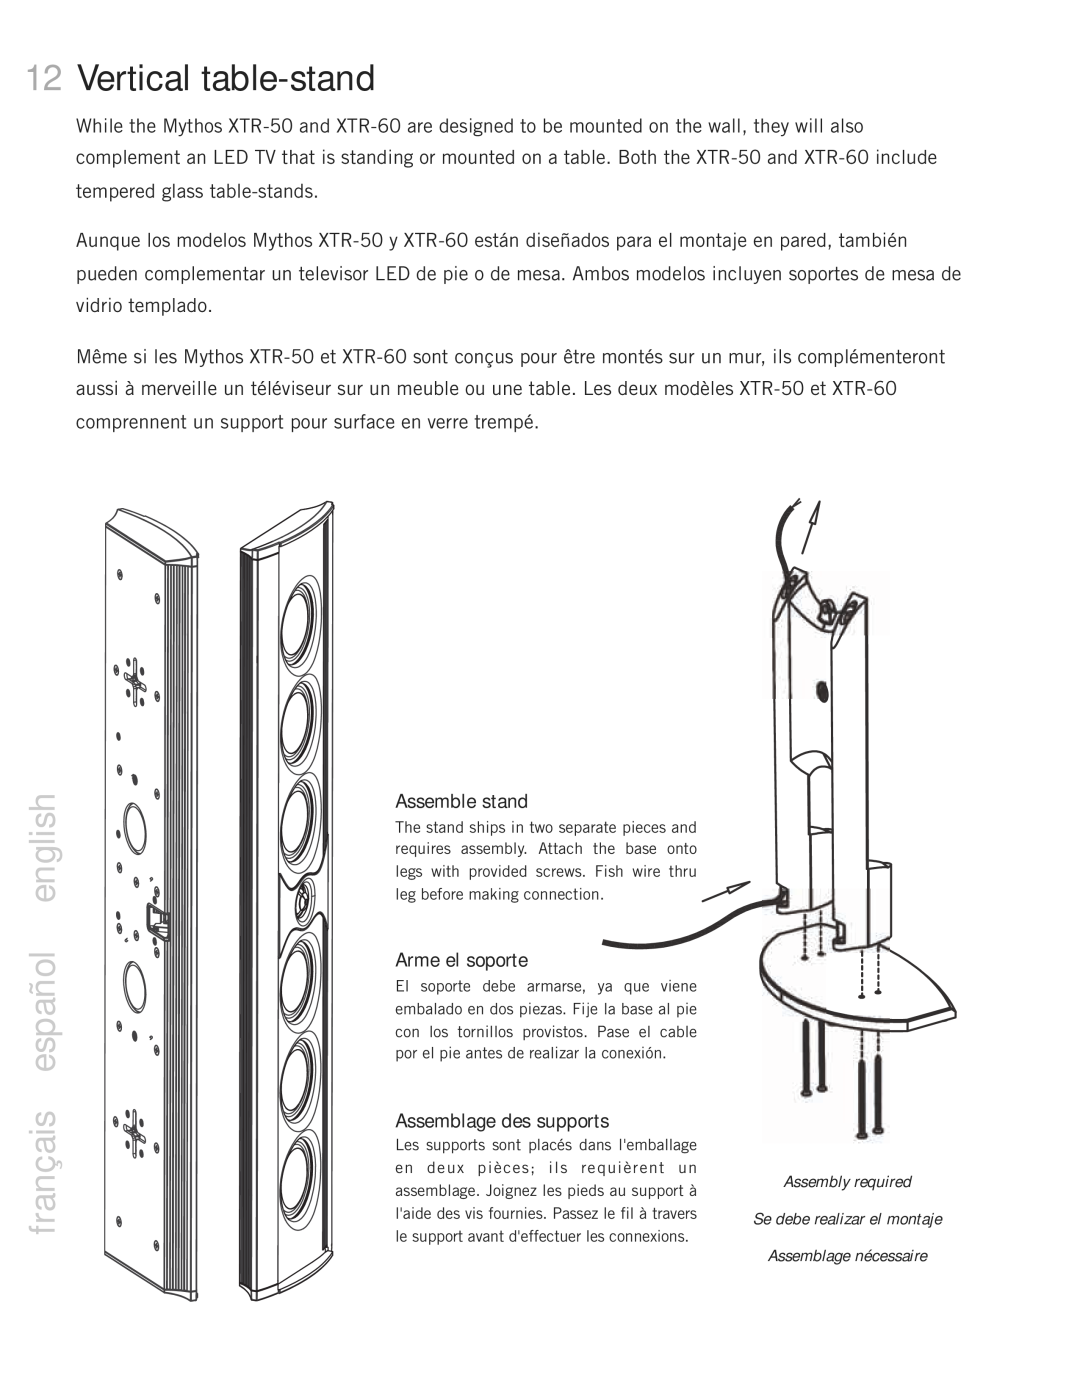 Definitive Technology 50, 60, 20BP, 40, Mythos XTR Loudspeaker System Vertical table-stand, français español english 